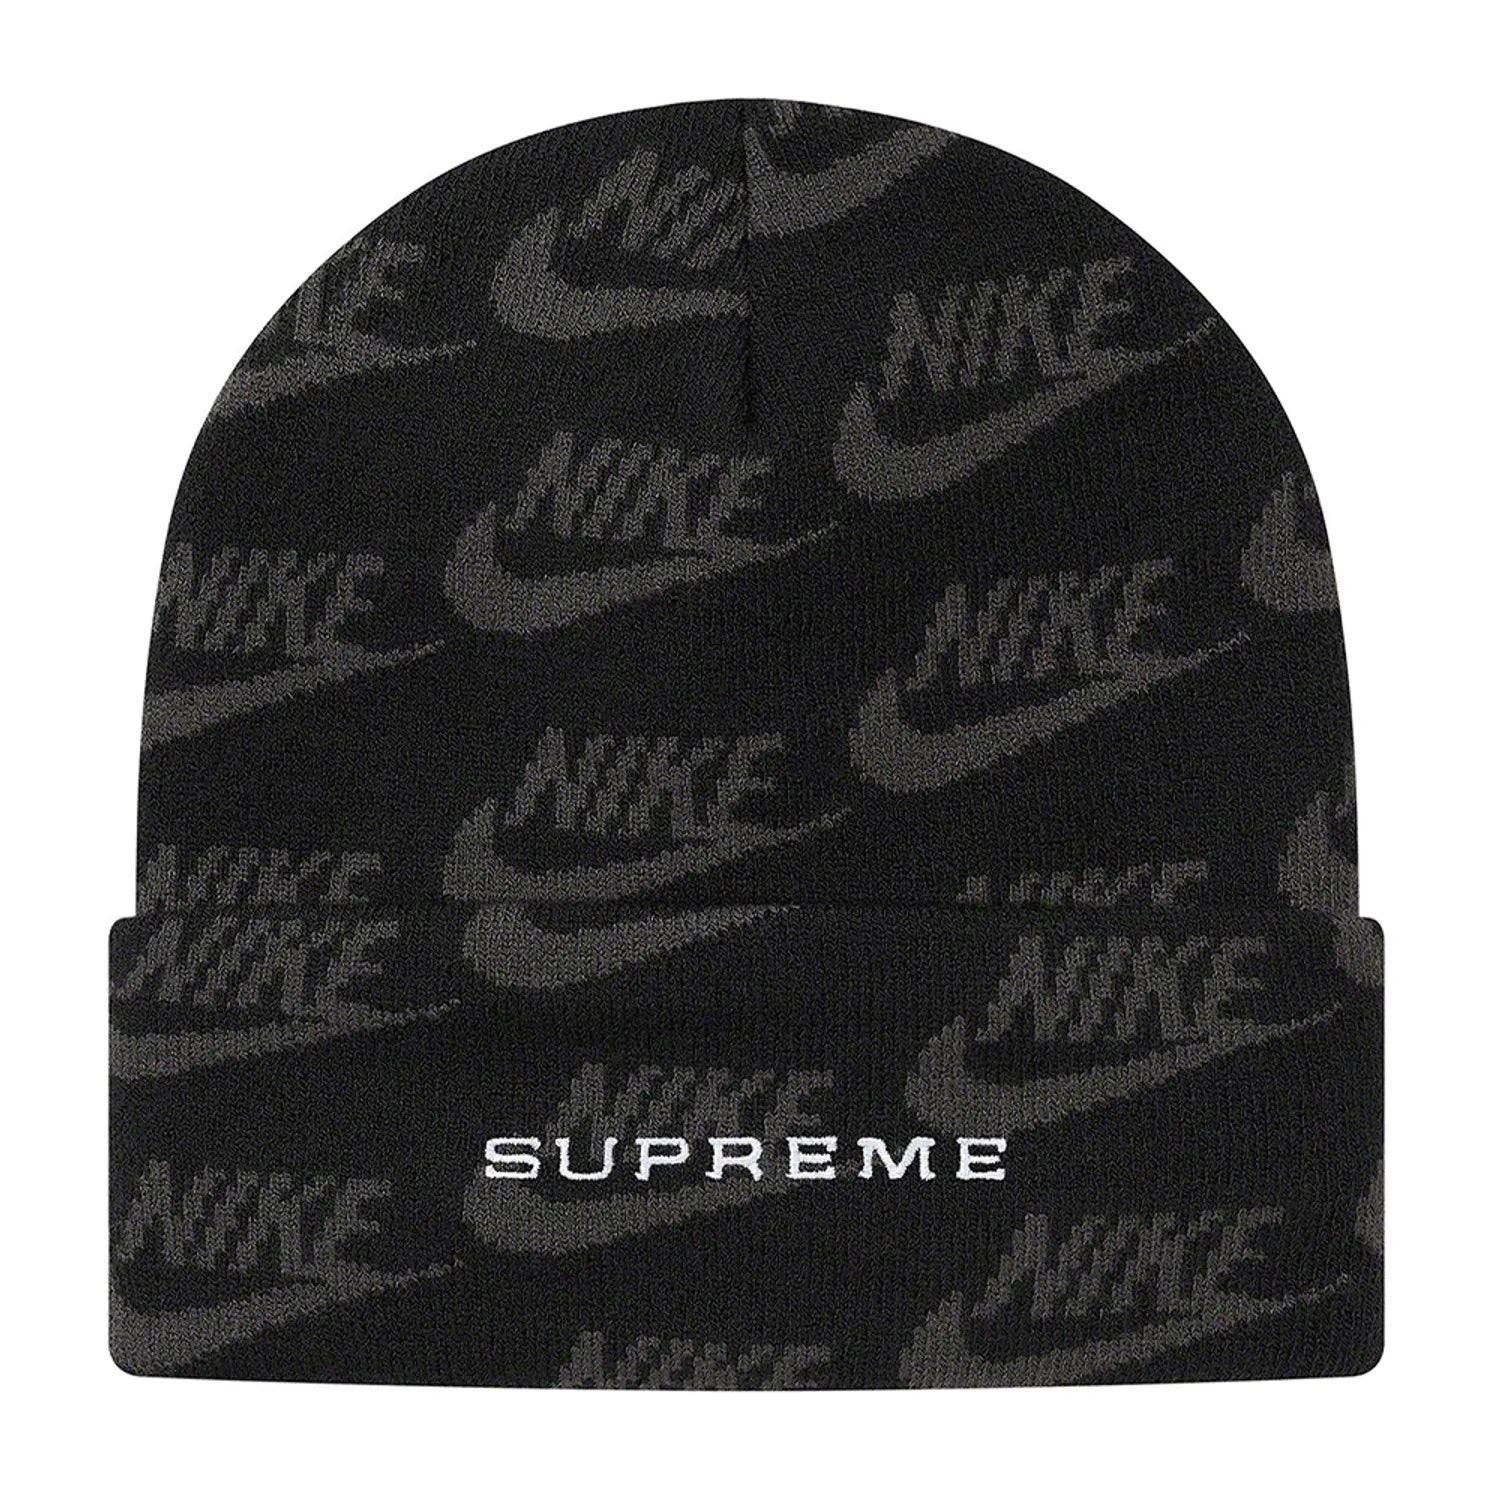 Supreme x Nike Beanie "Dark Grey"